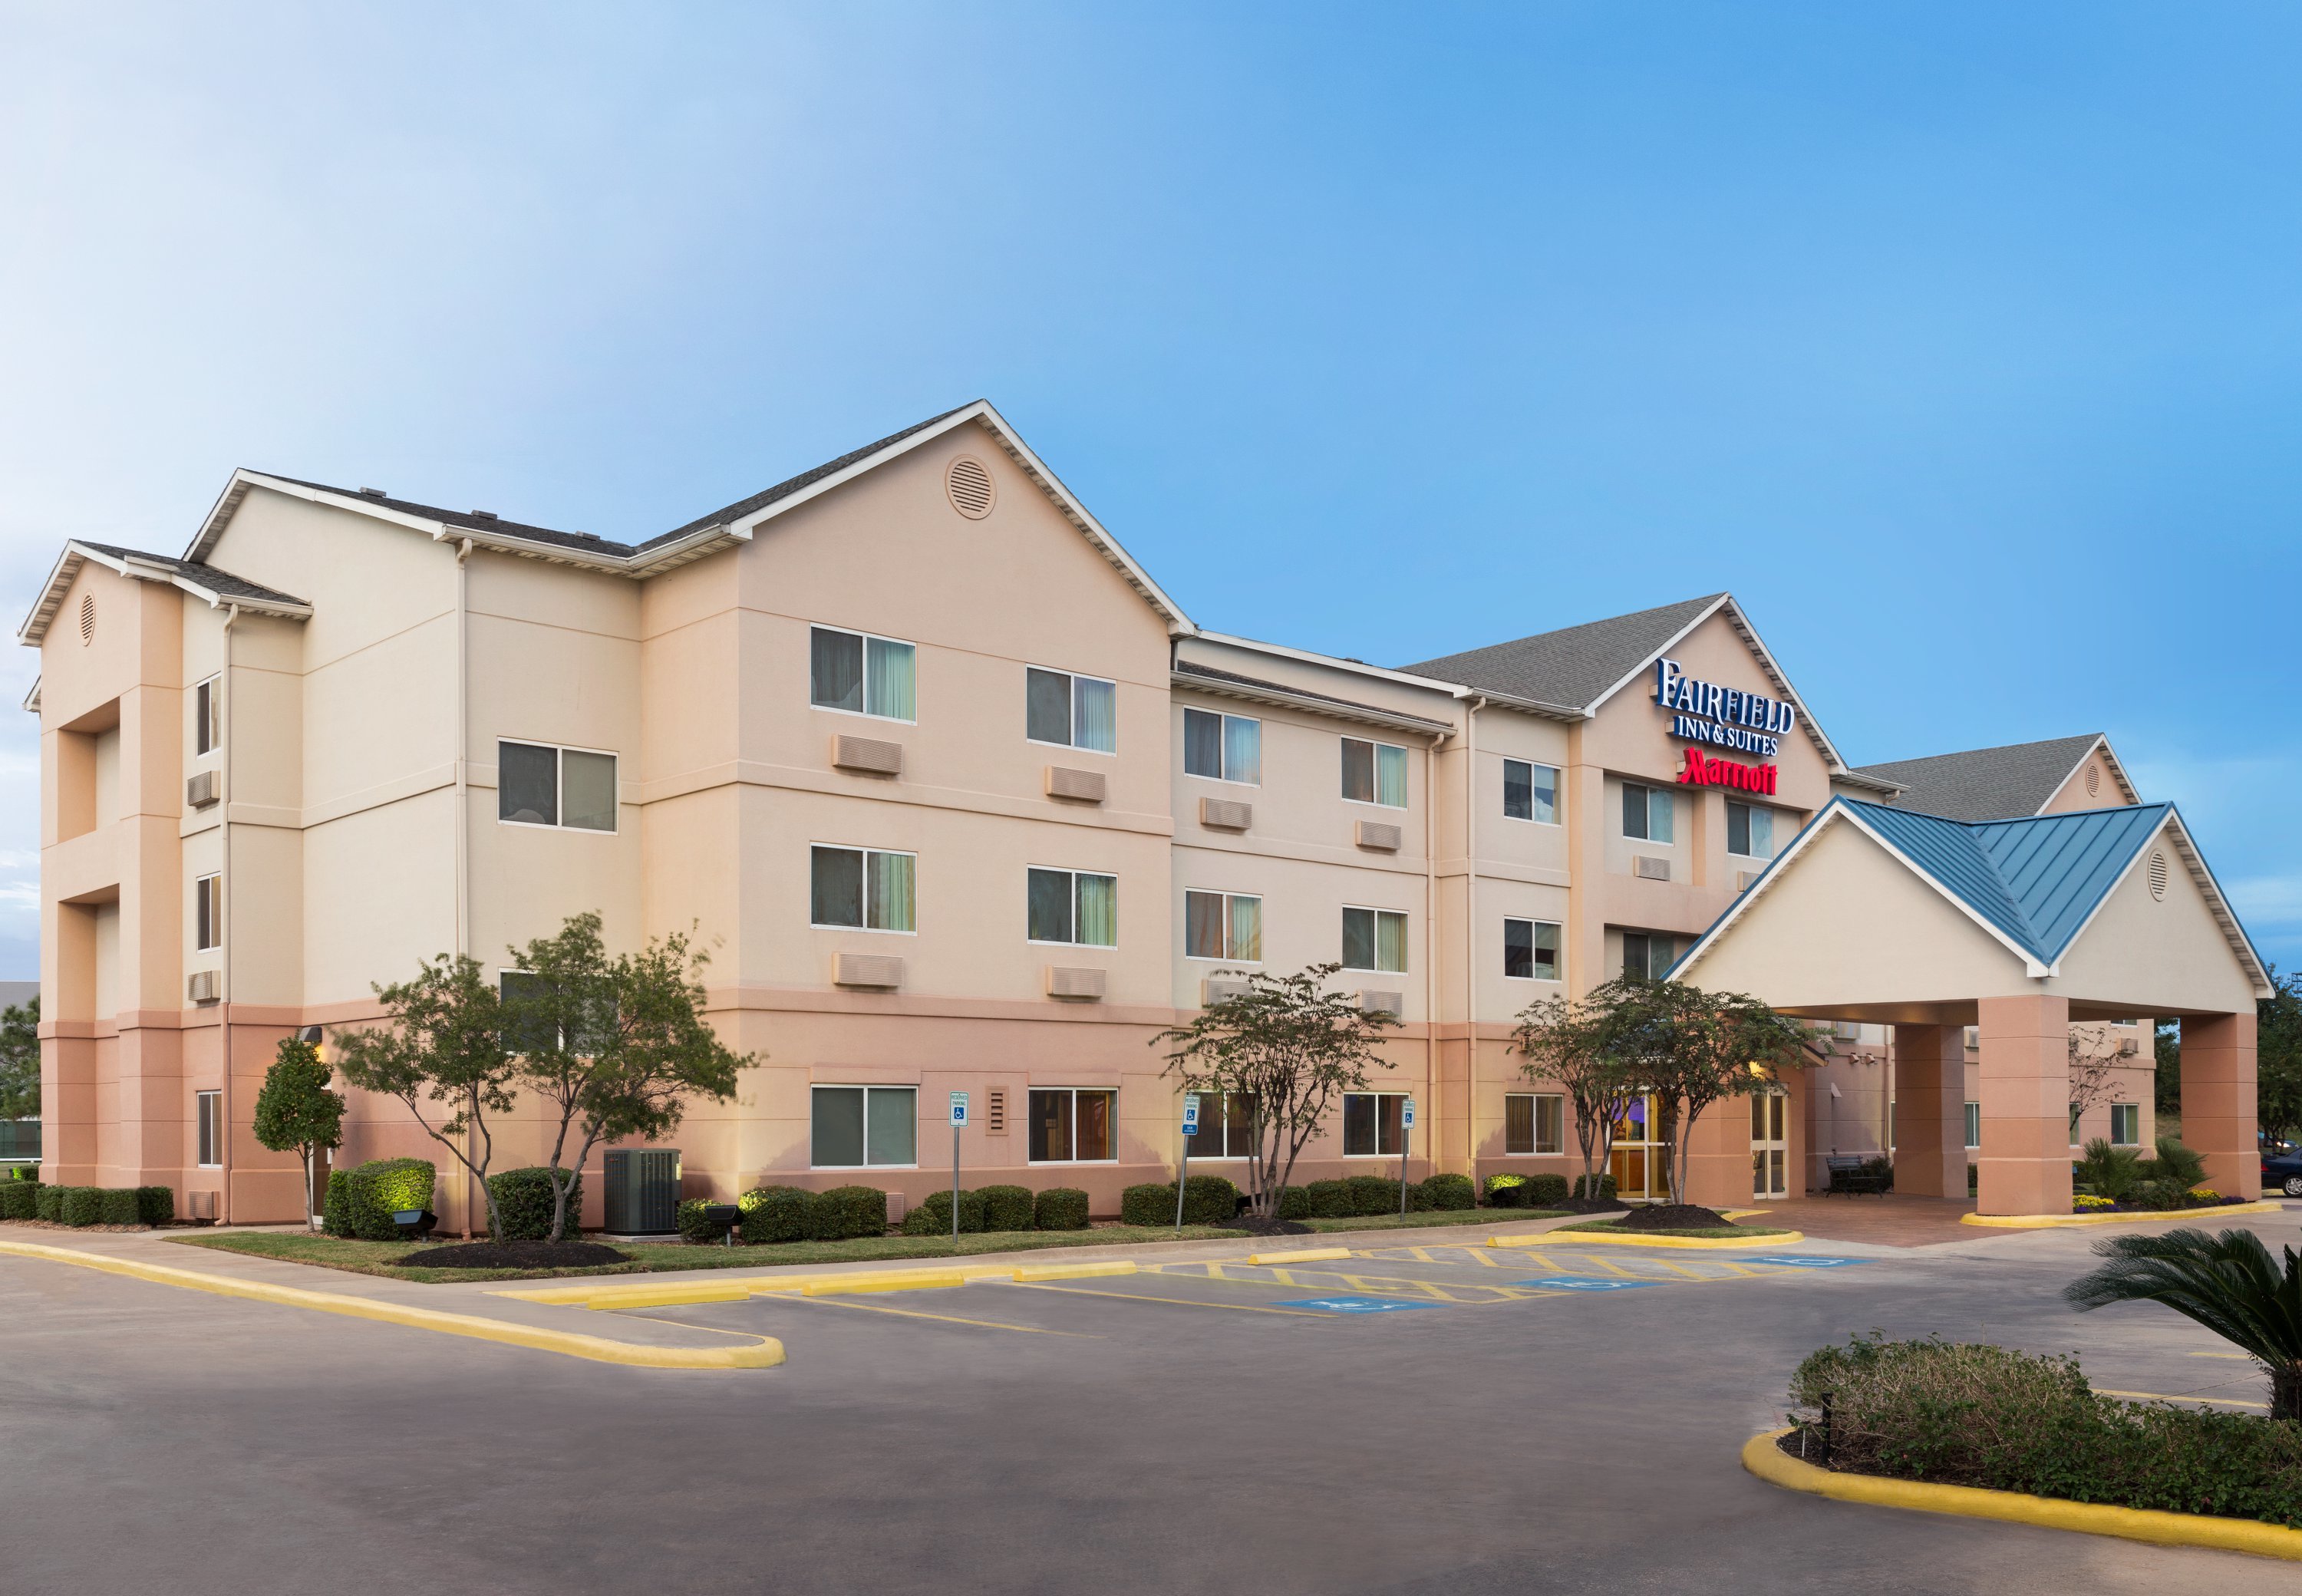 Photo of Fairfield Inn & Suites by Marriott Houston North/Cypress Station, Houston, TX